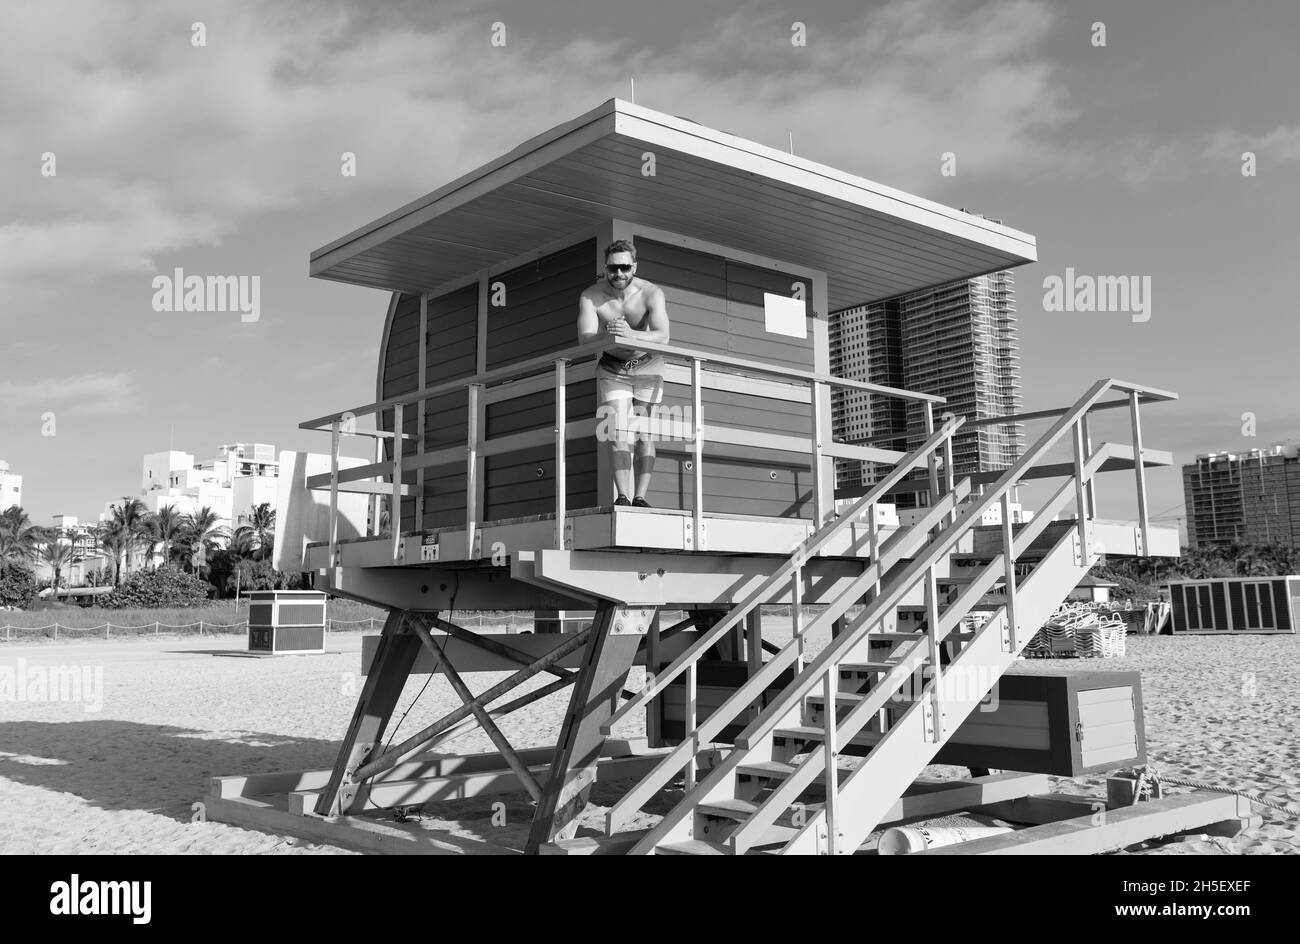 Beach guard. Man stand on lifeguard tower. Beach vacation. Summer break. Seaside holidays Stock Photo